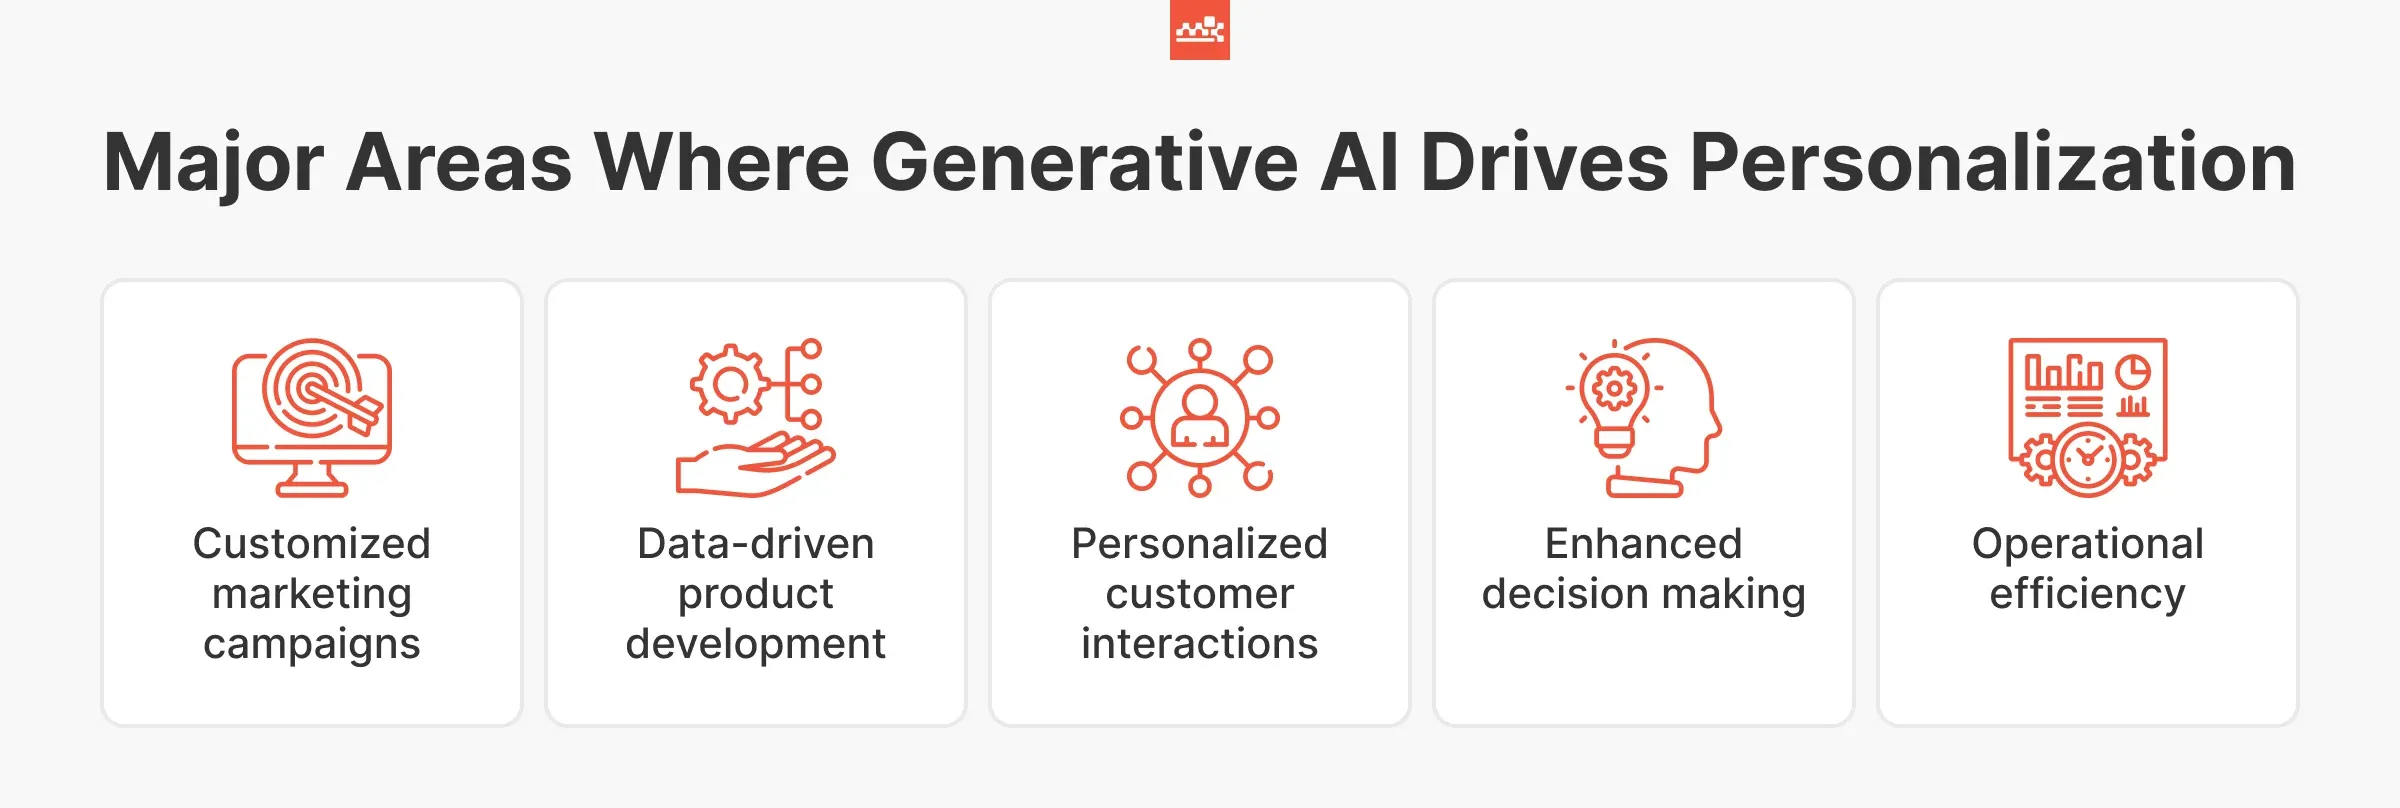 Personalization with Generative AI